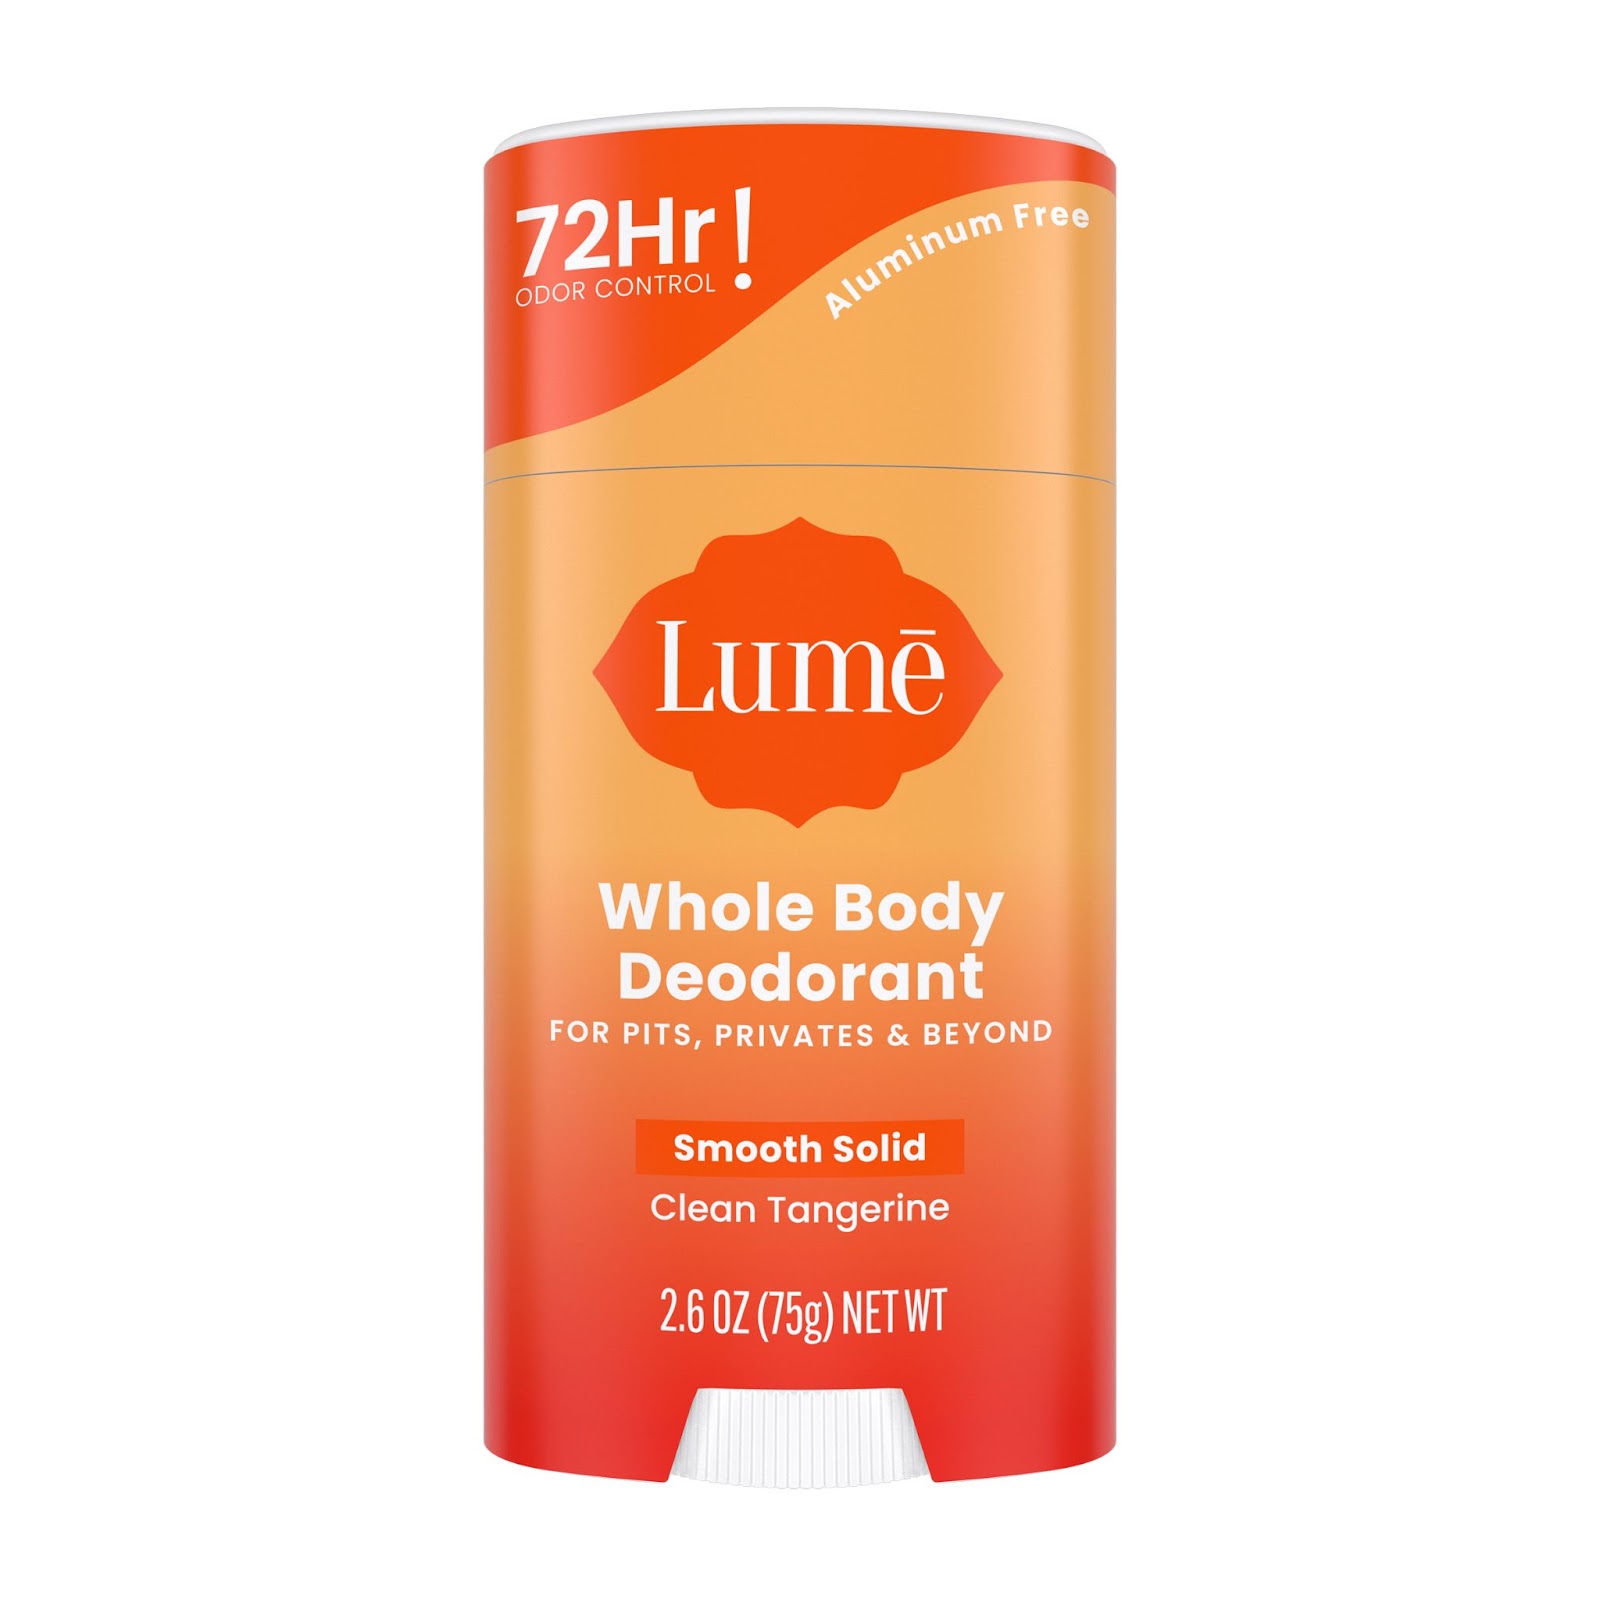 Lumē Whole Body Deodorant, $15